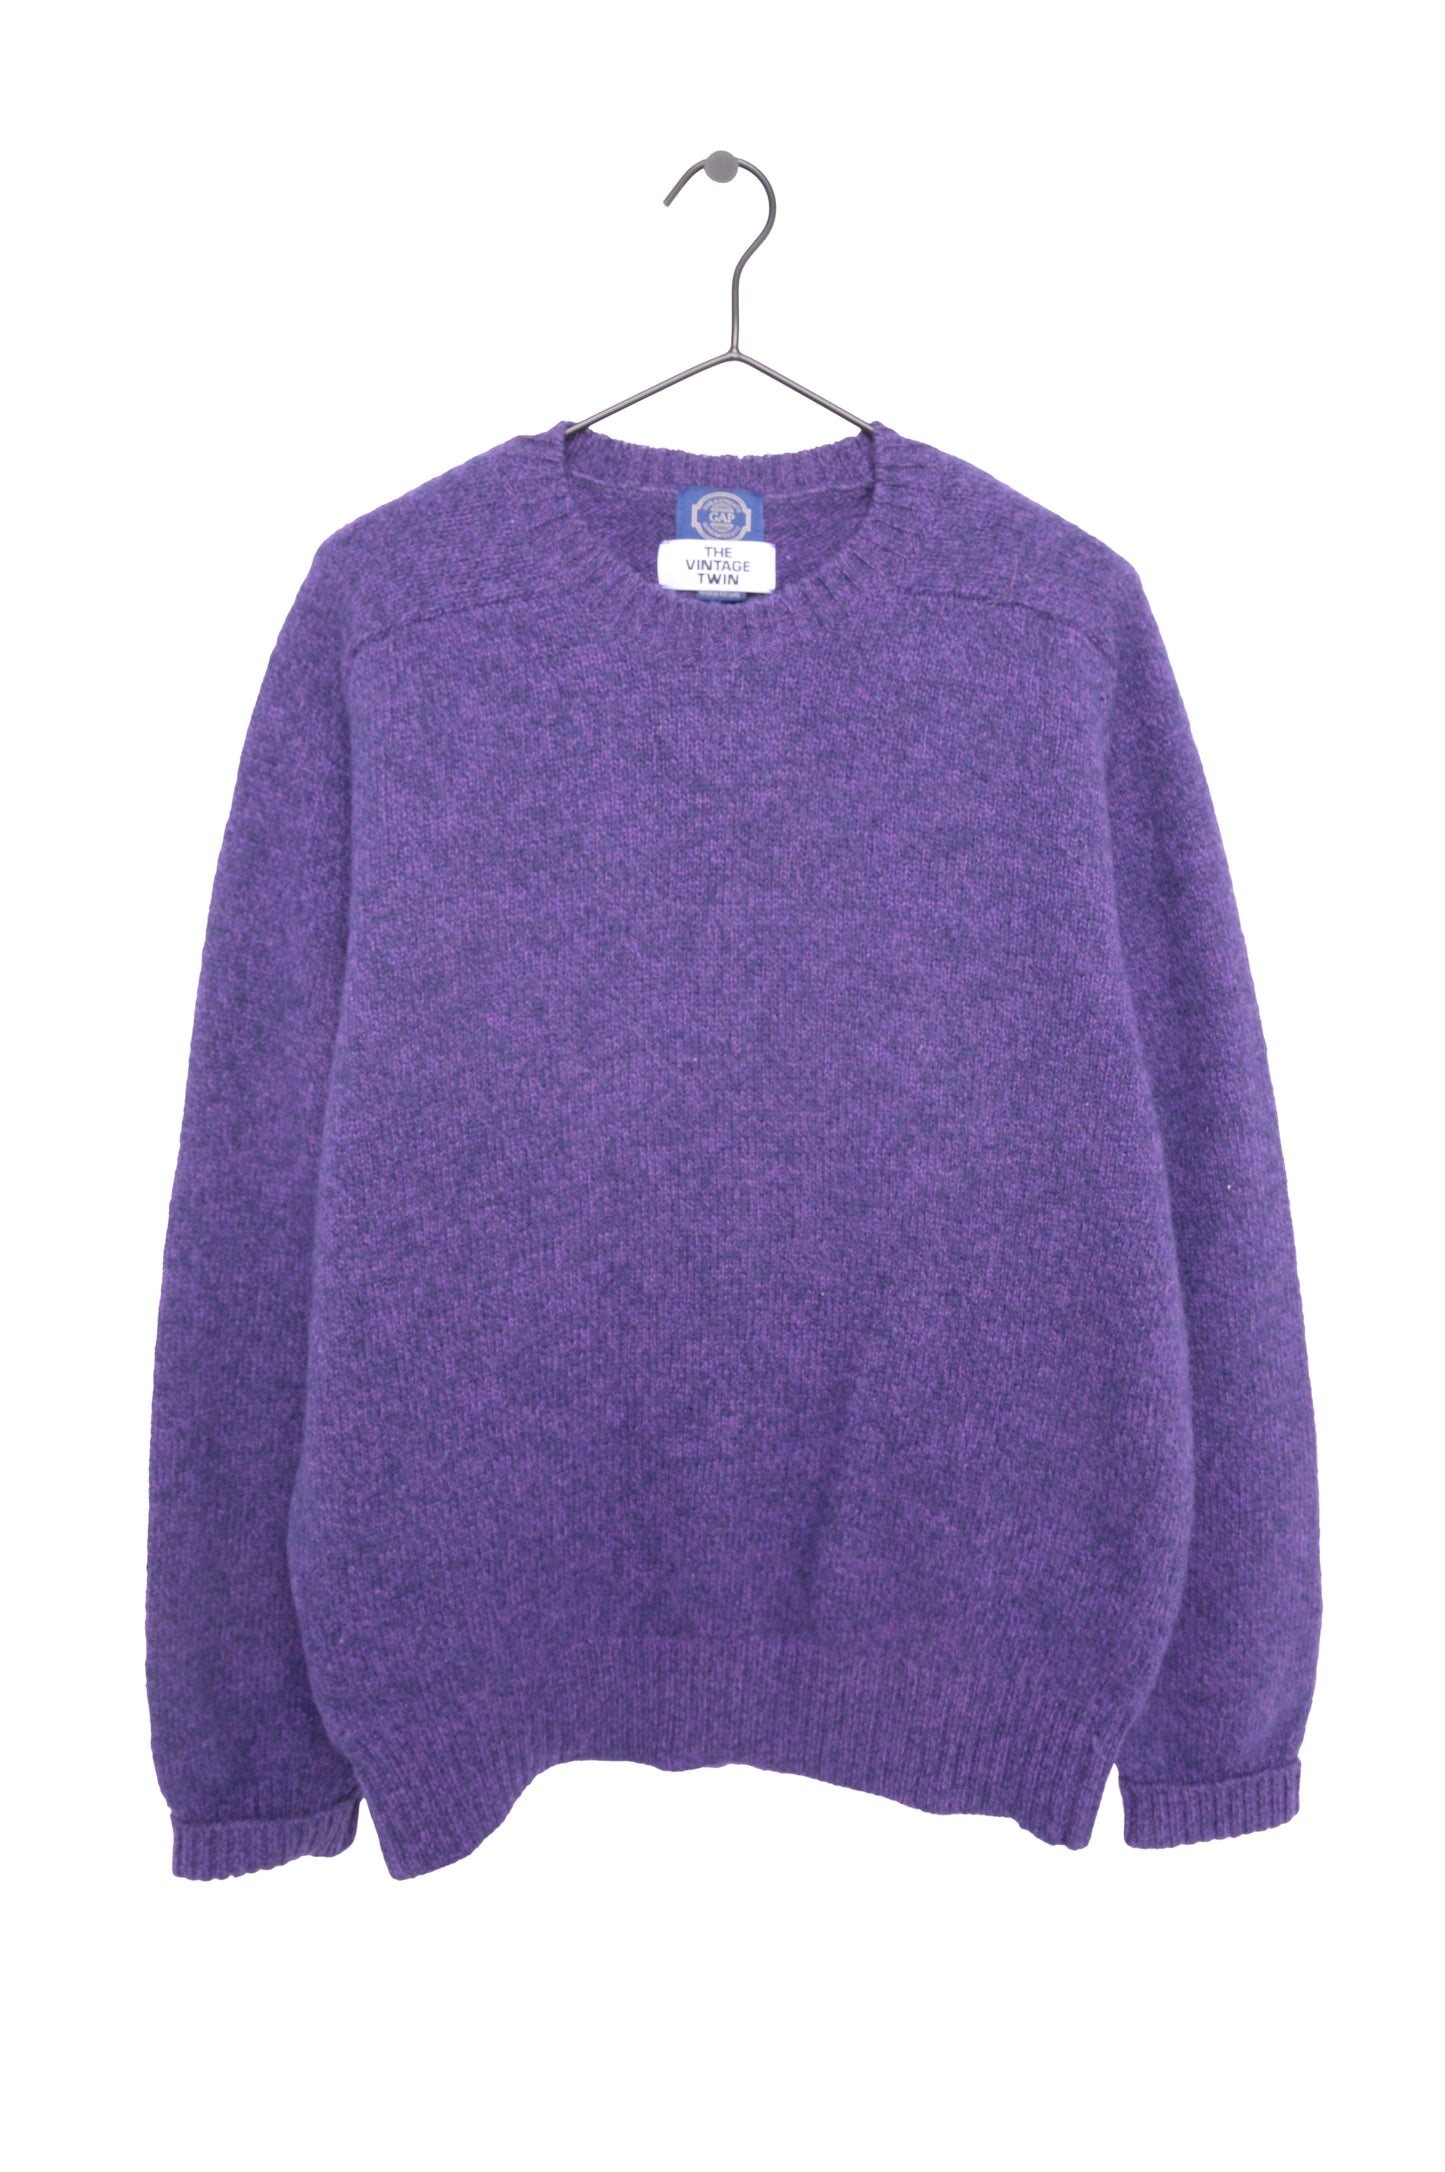 1990s Gap Wool Sweater